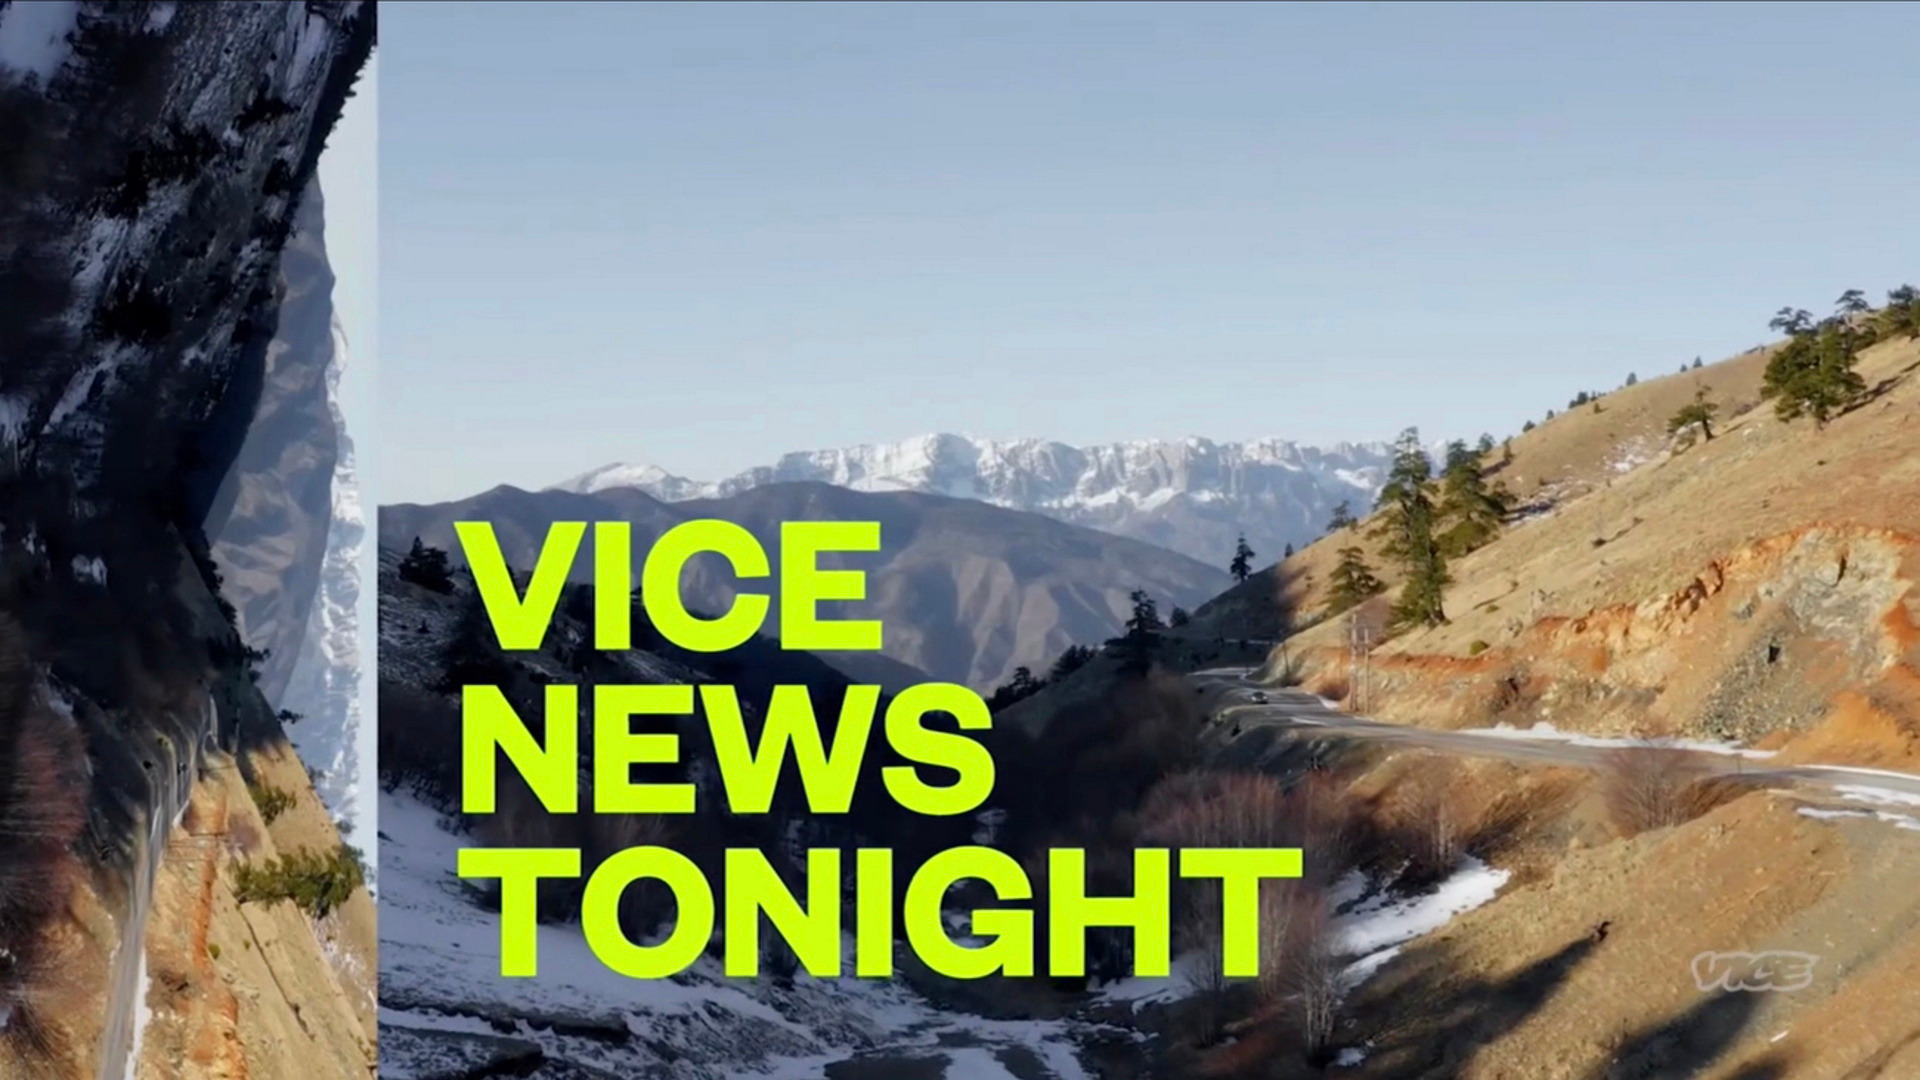 Show VICE News Tonight